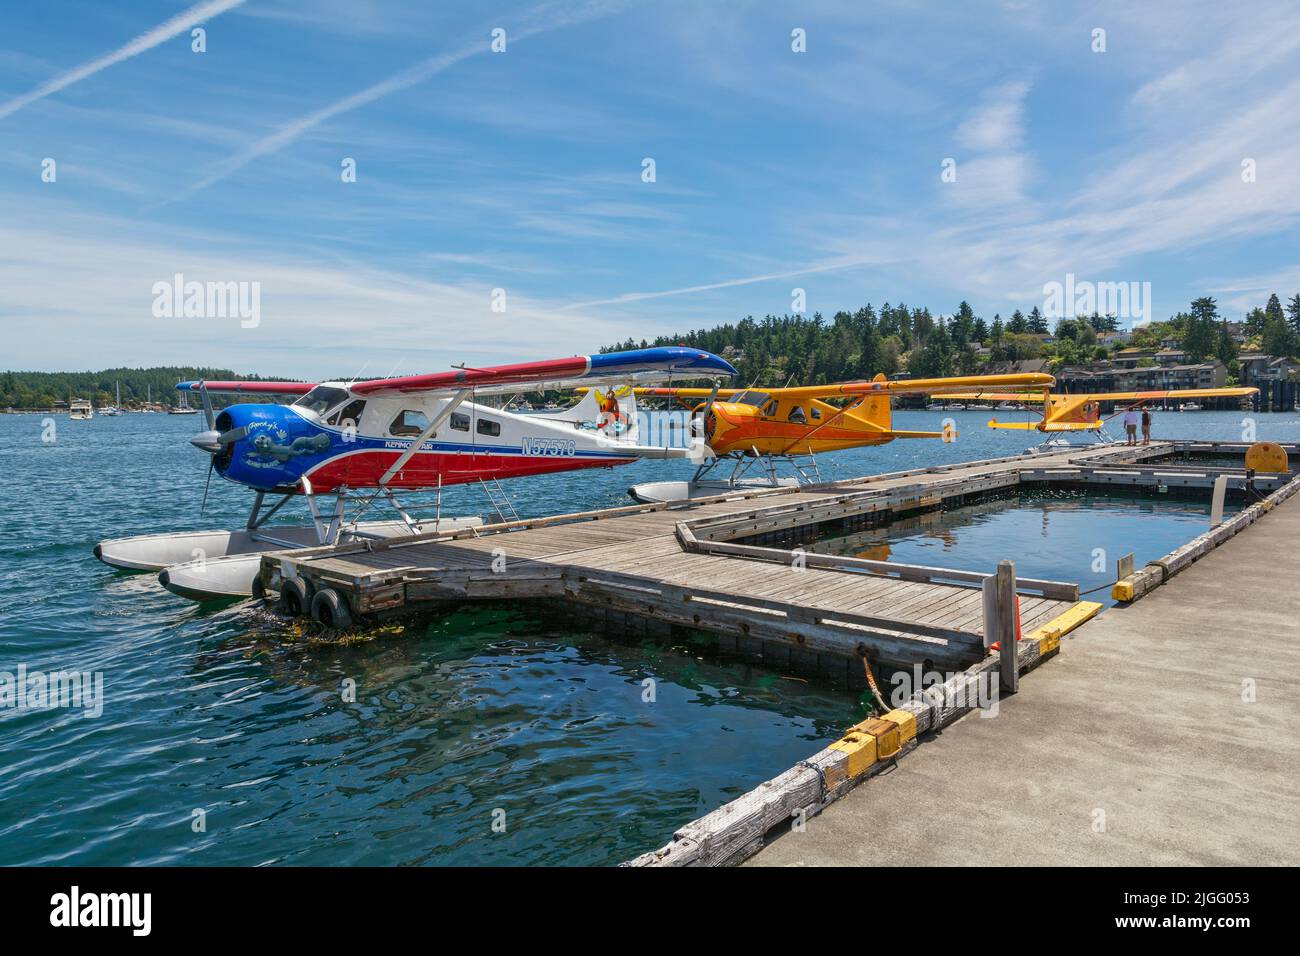 Washington, Isla de San Juan, Friday Harbor, de Havilland Canada DHC-2 Beaver, aviones flotantes Foto de stock